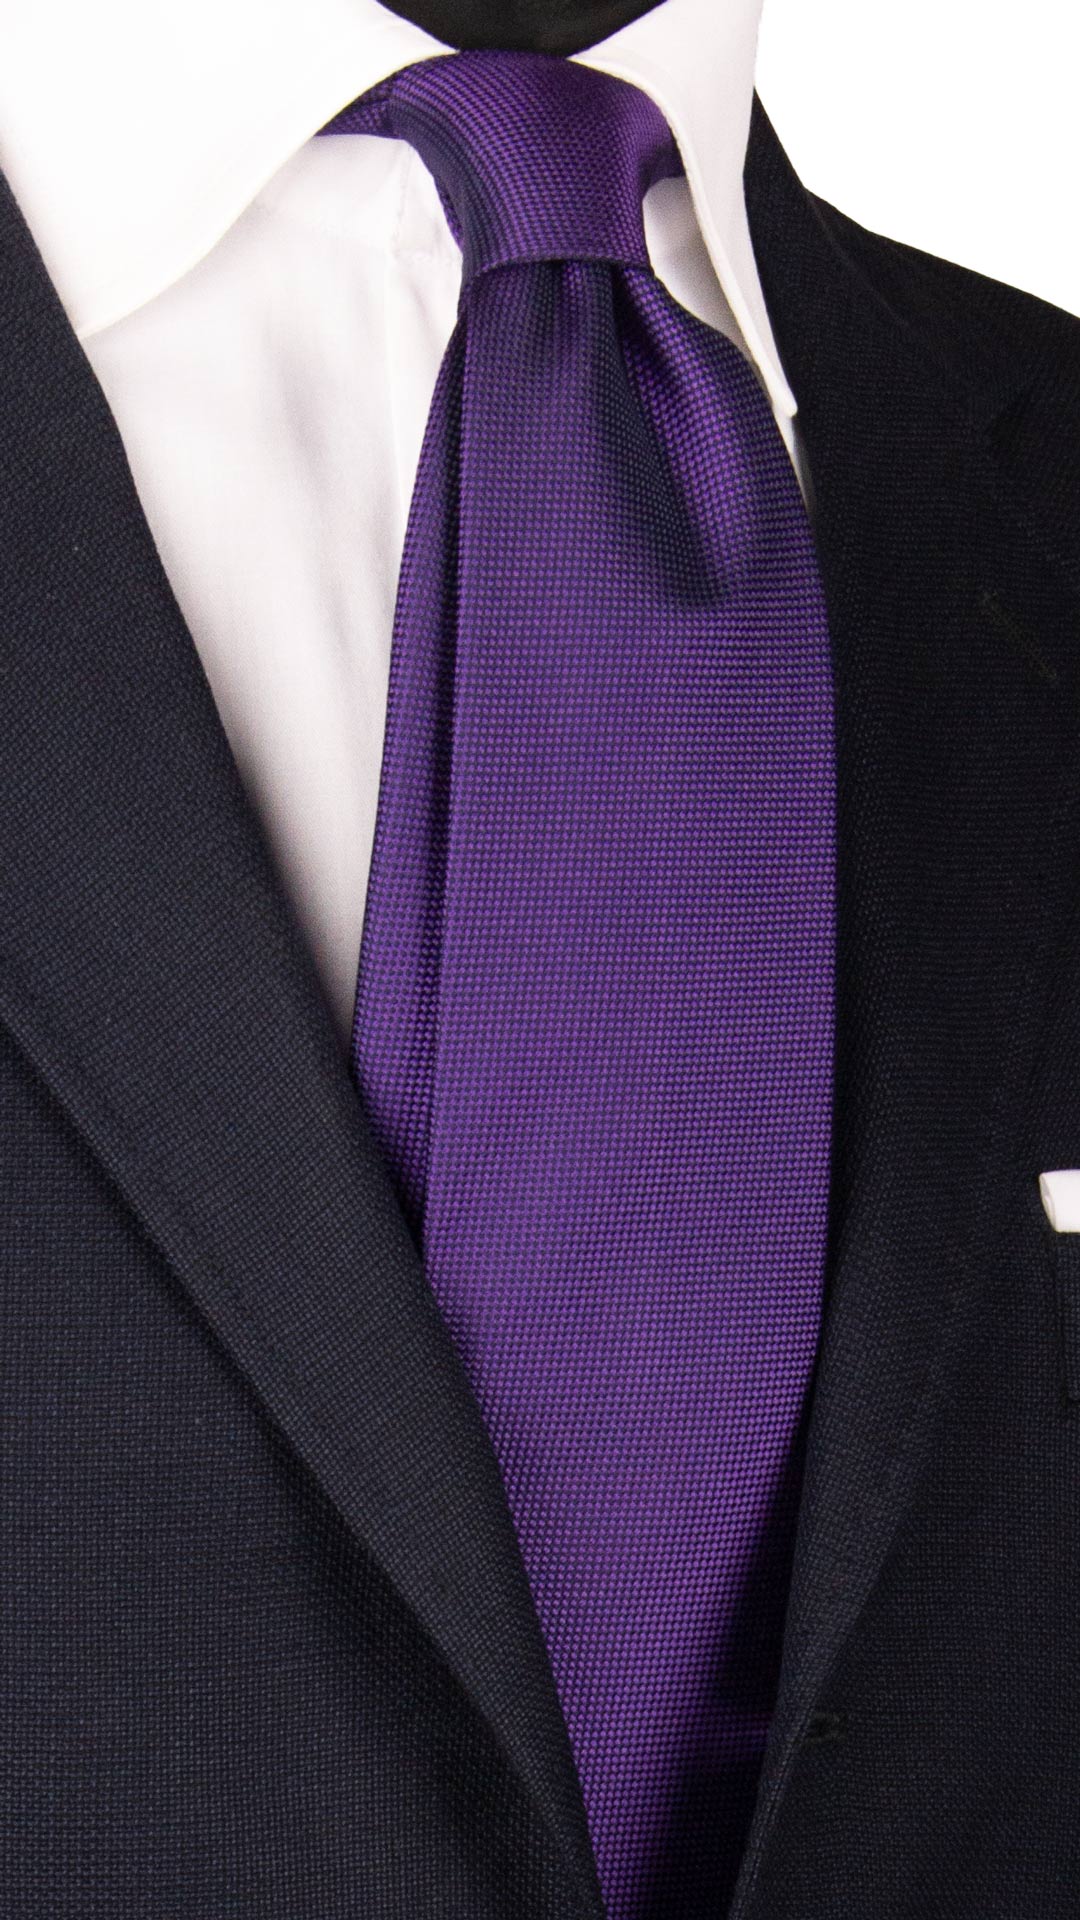 Cravatta di Seta Viola Tinta Unita 7028 Made in italy Graffeo Cravatte